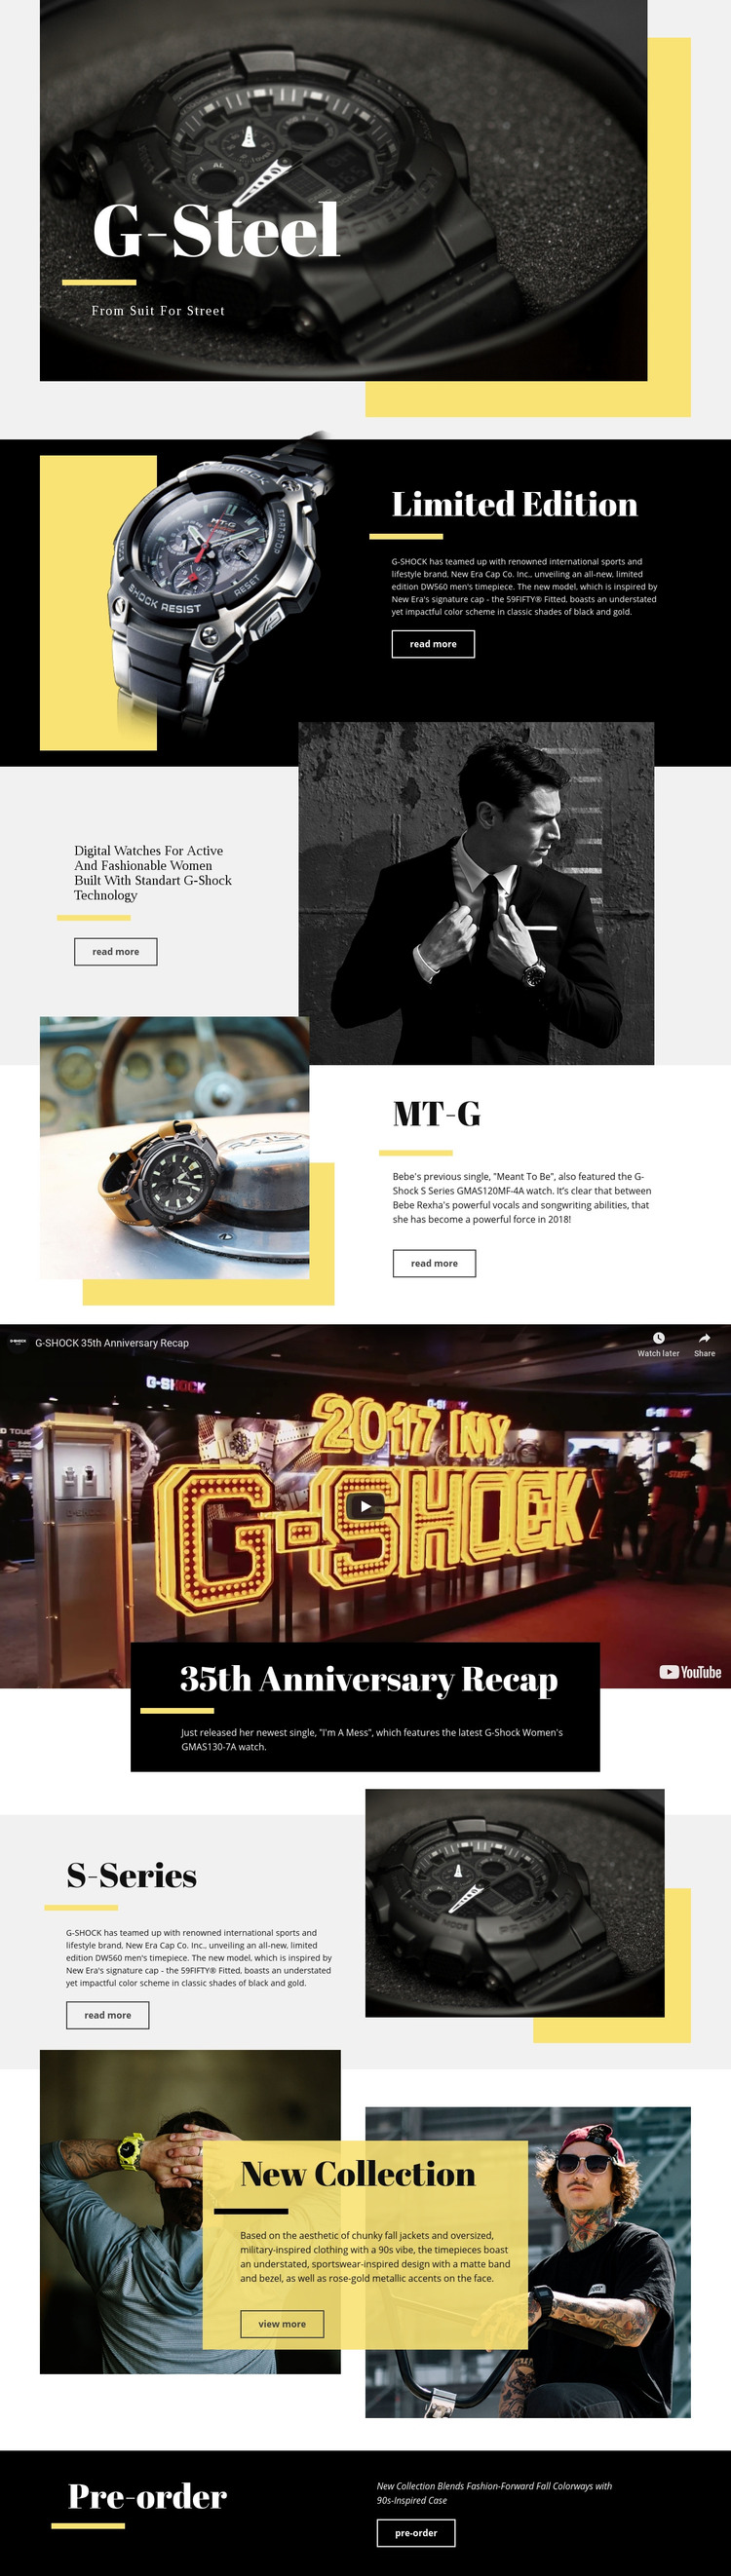 G-Steel Homepage Design